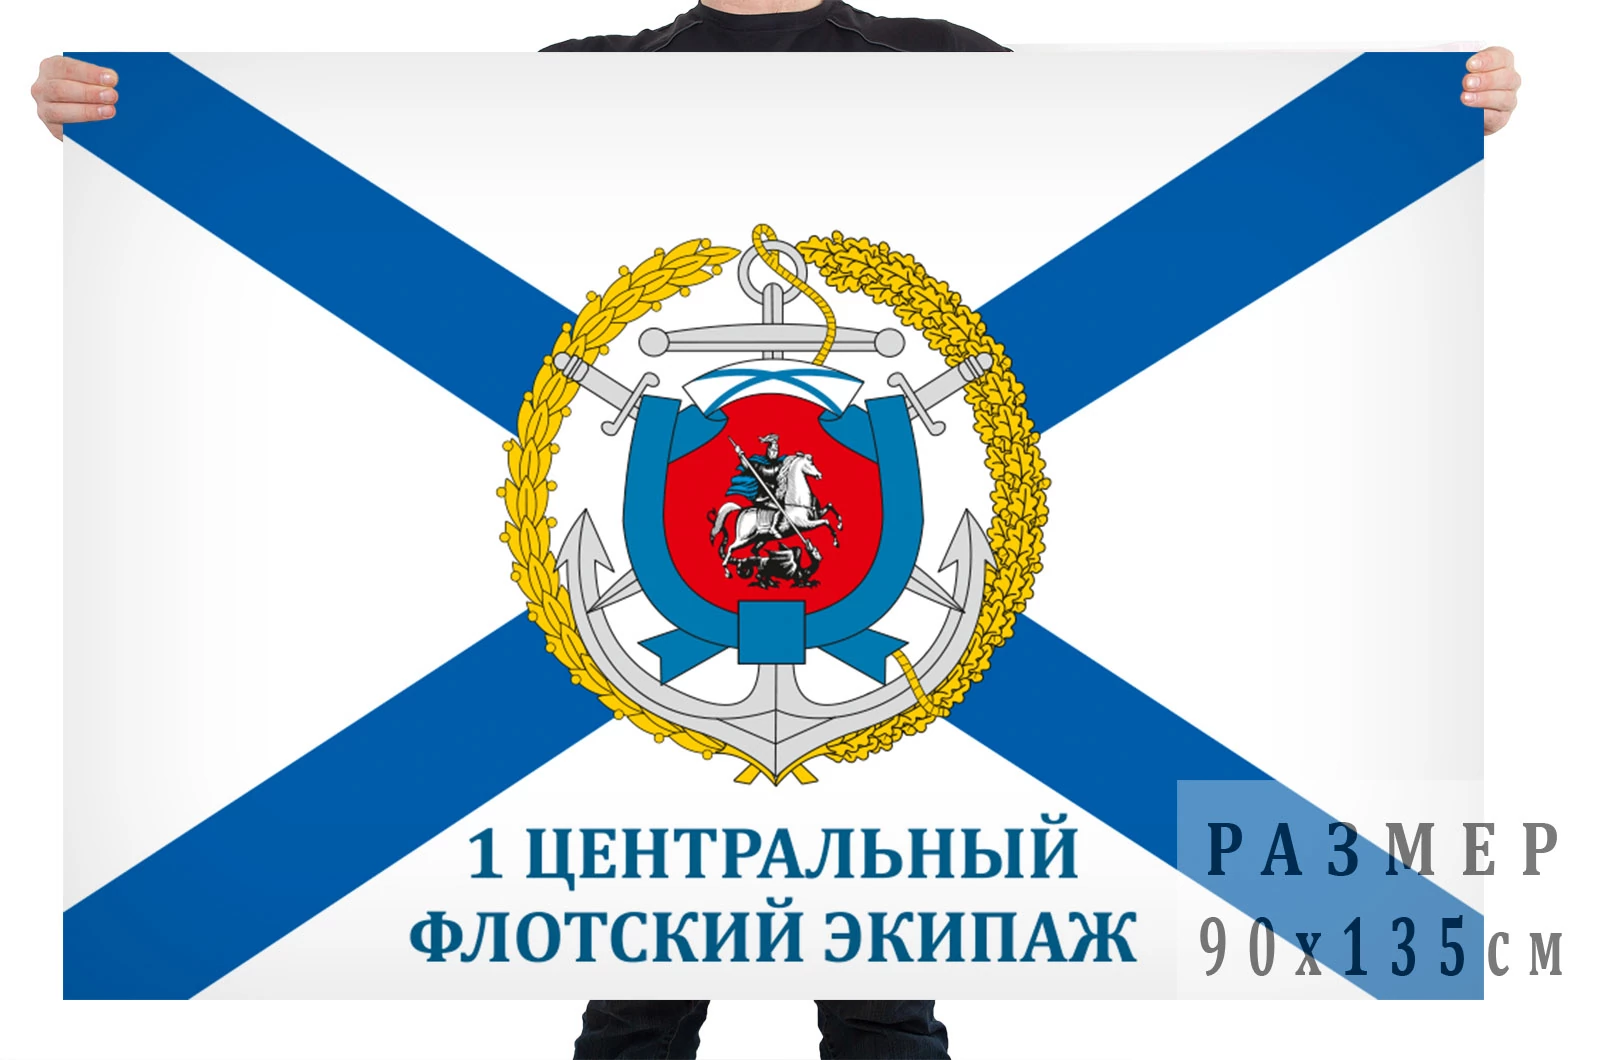 Флаг 1 центрального флотского экипажа